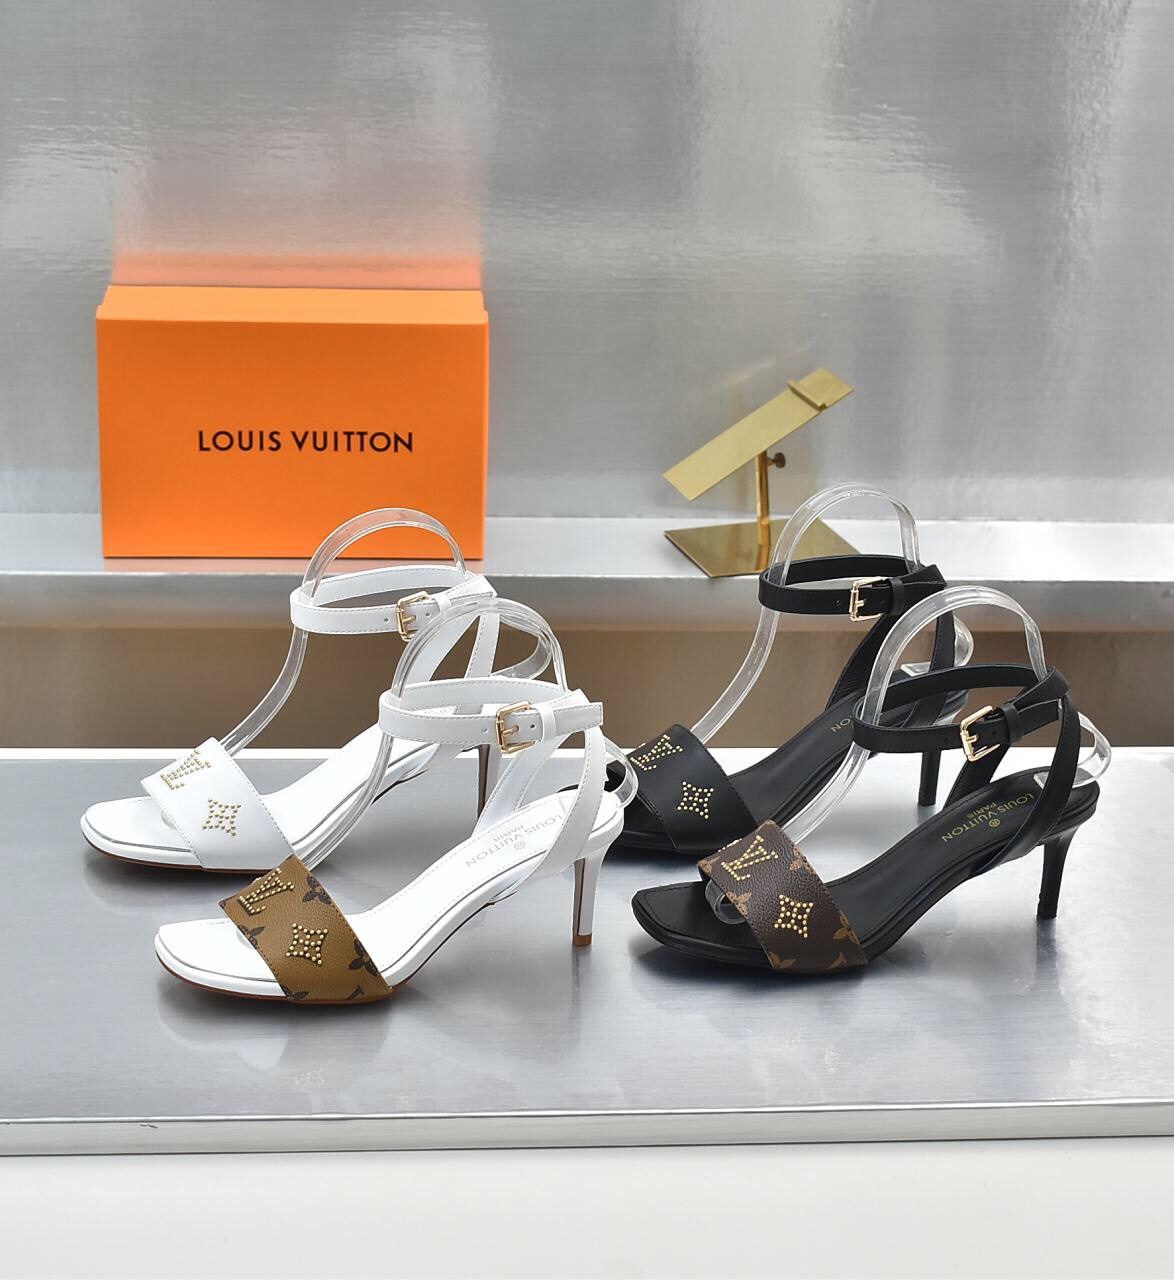 Louis Vuitton Schuhe Sandalen Schwarz Rose Weiß Kalbsleder Baumwolle Rindsleder Ziegenhaut Kautschuk Schaffell Fashion